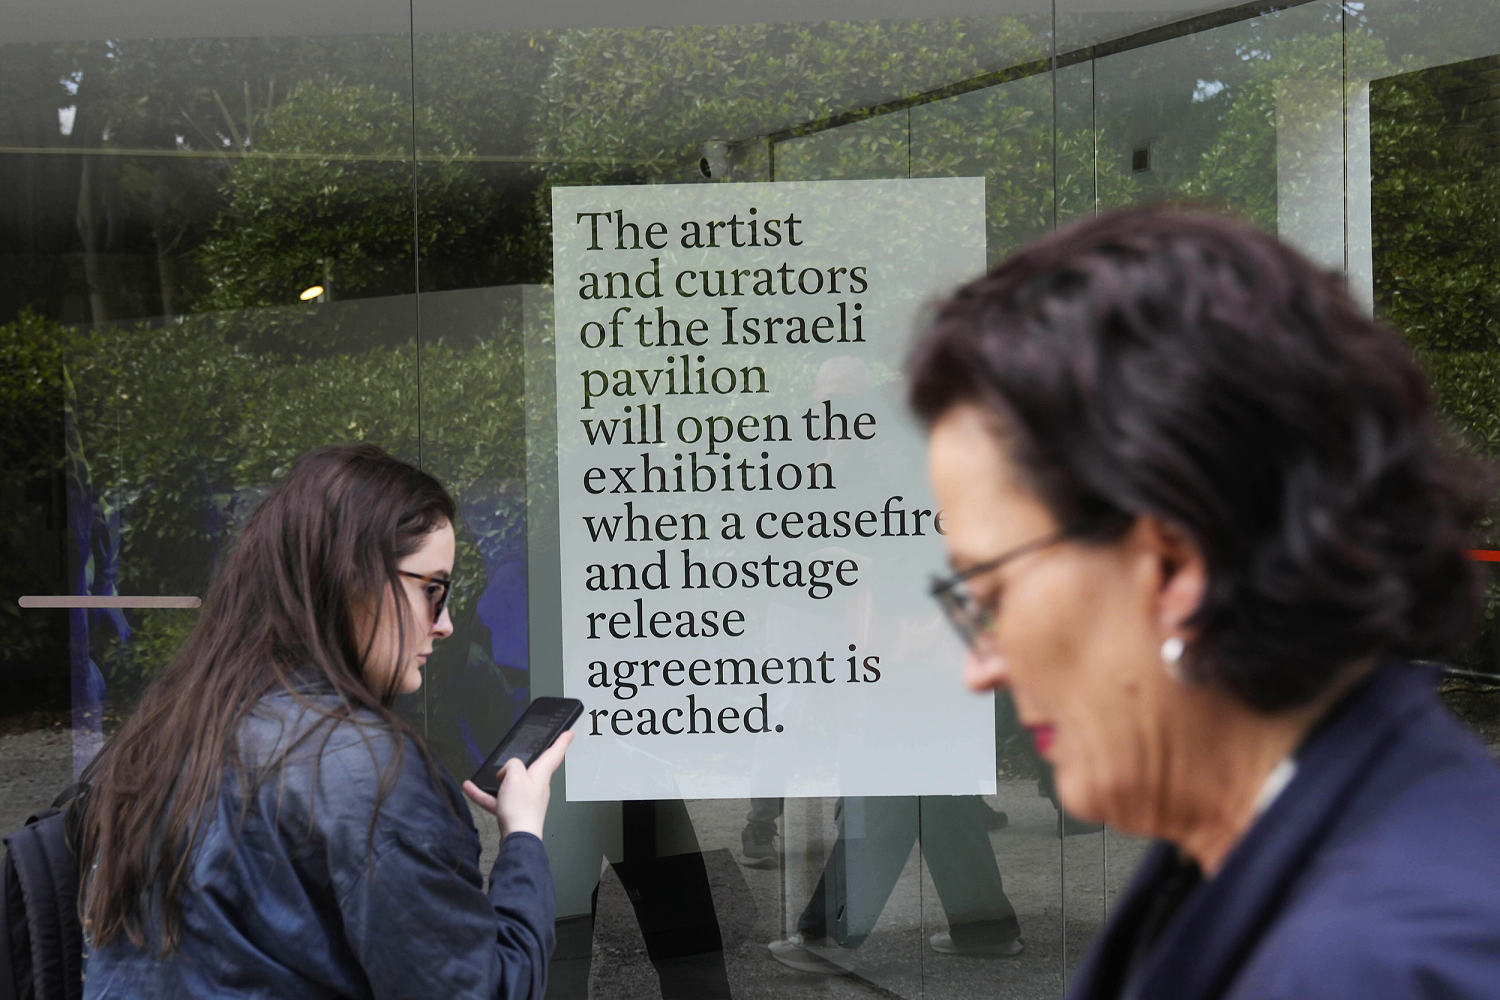 Artist refuses to open Israeli pavilion at Venice Biennale until Gaza cease-fire, hostage release